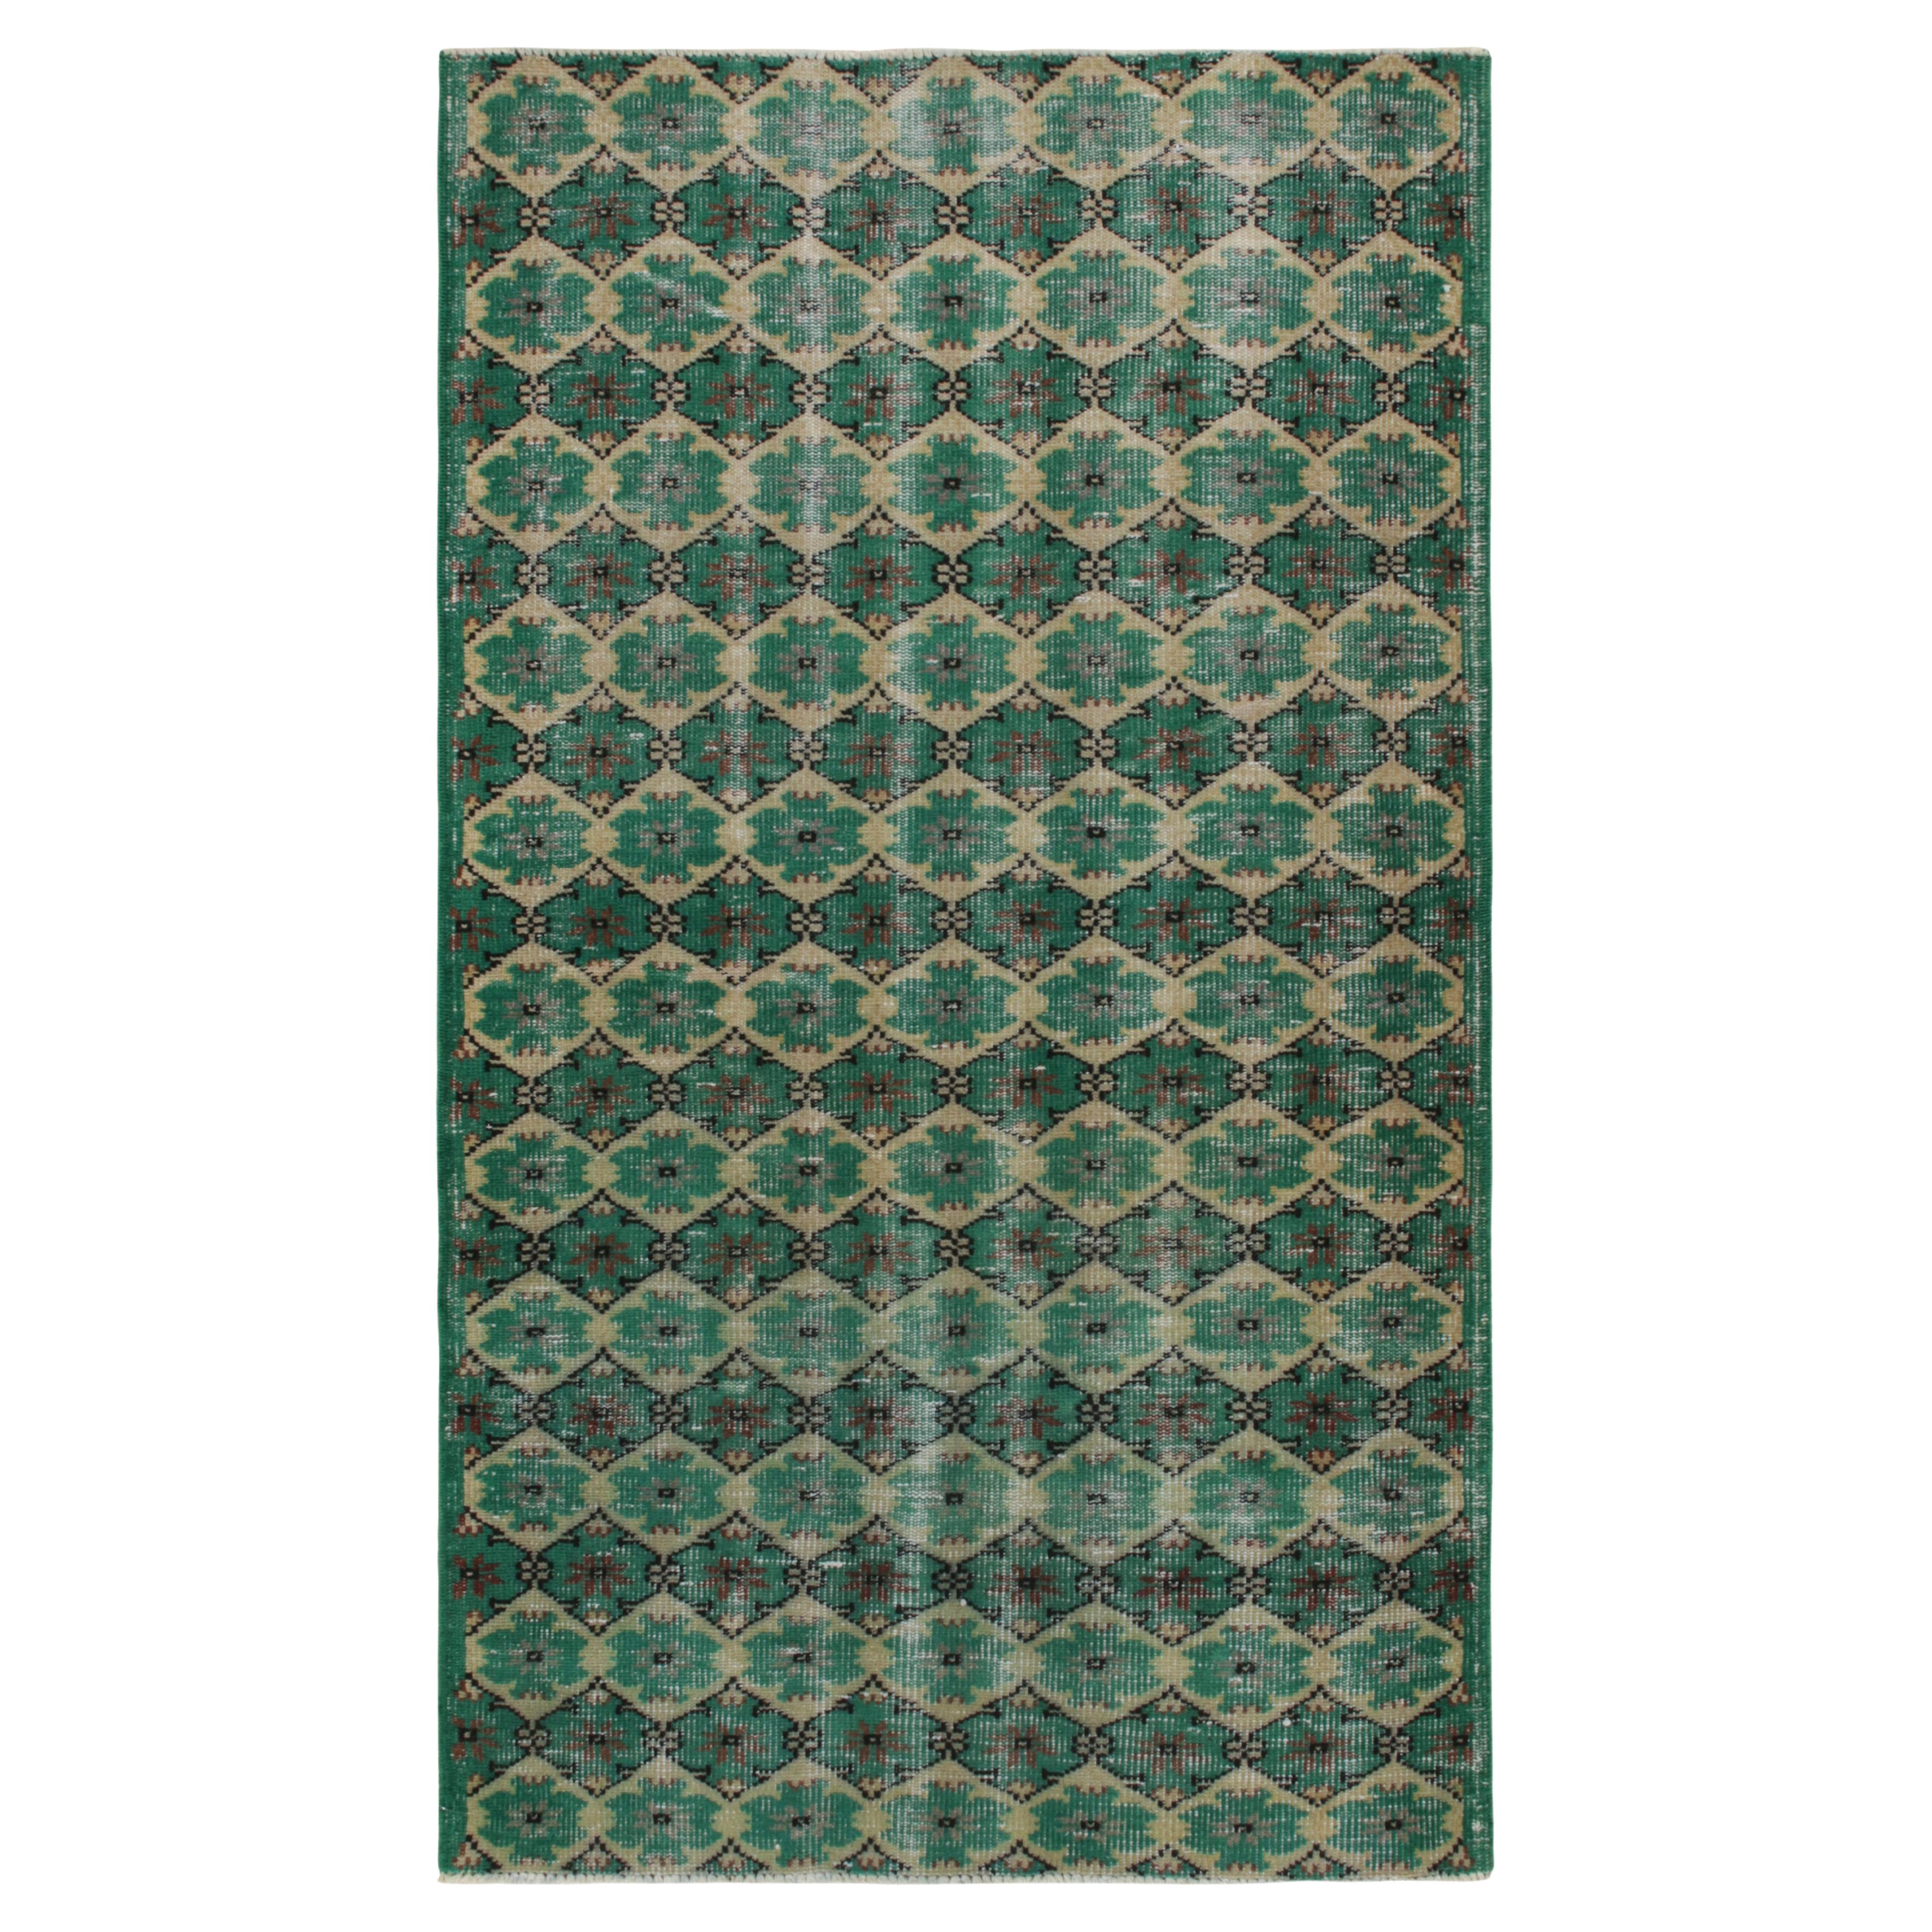 1960s Vintage Distressed Rug in Teal Green Lattice Patterns by Rug & Kilim For Sale